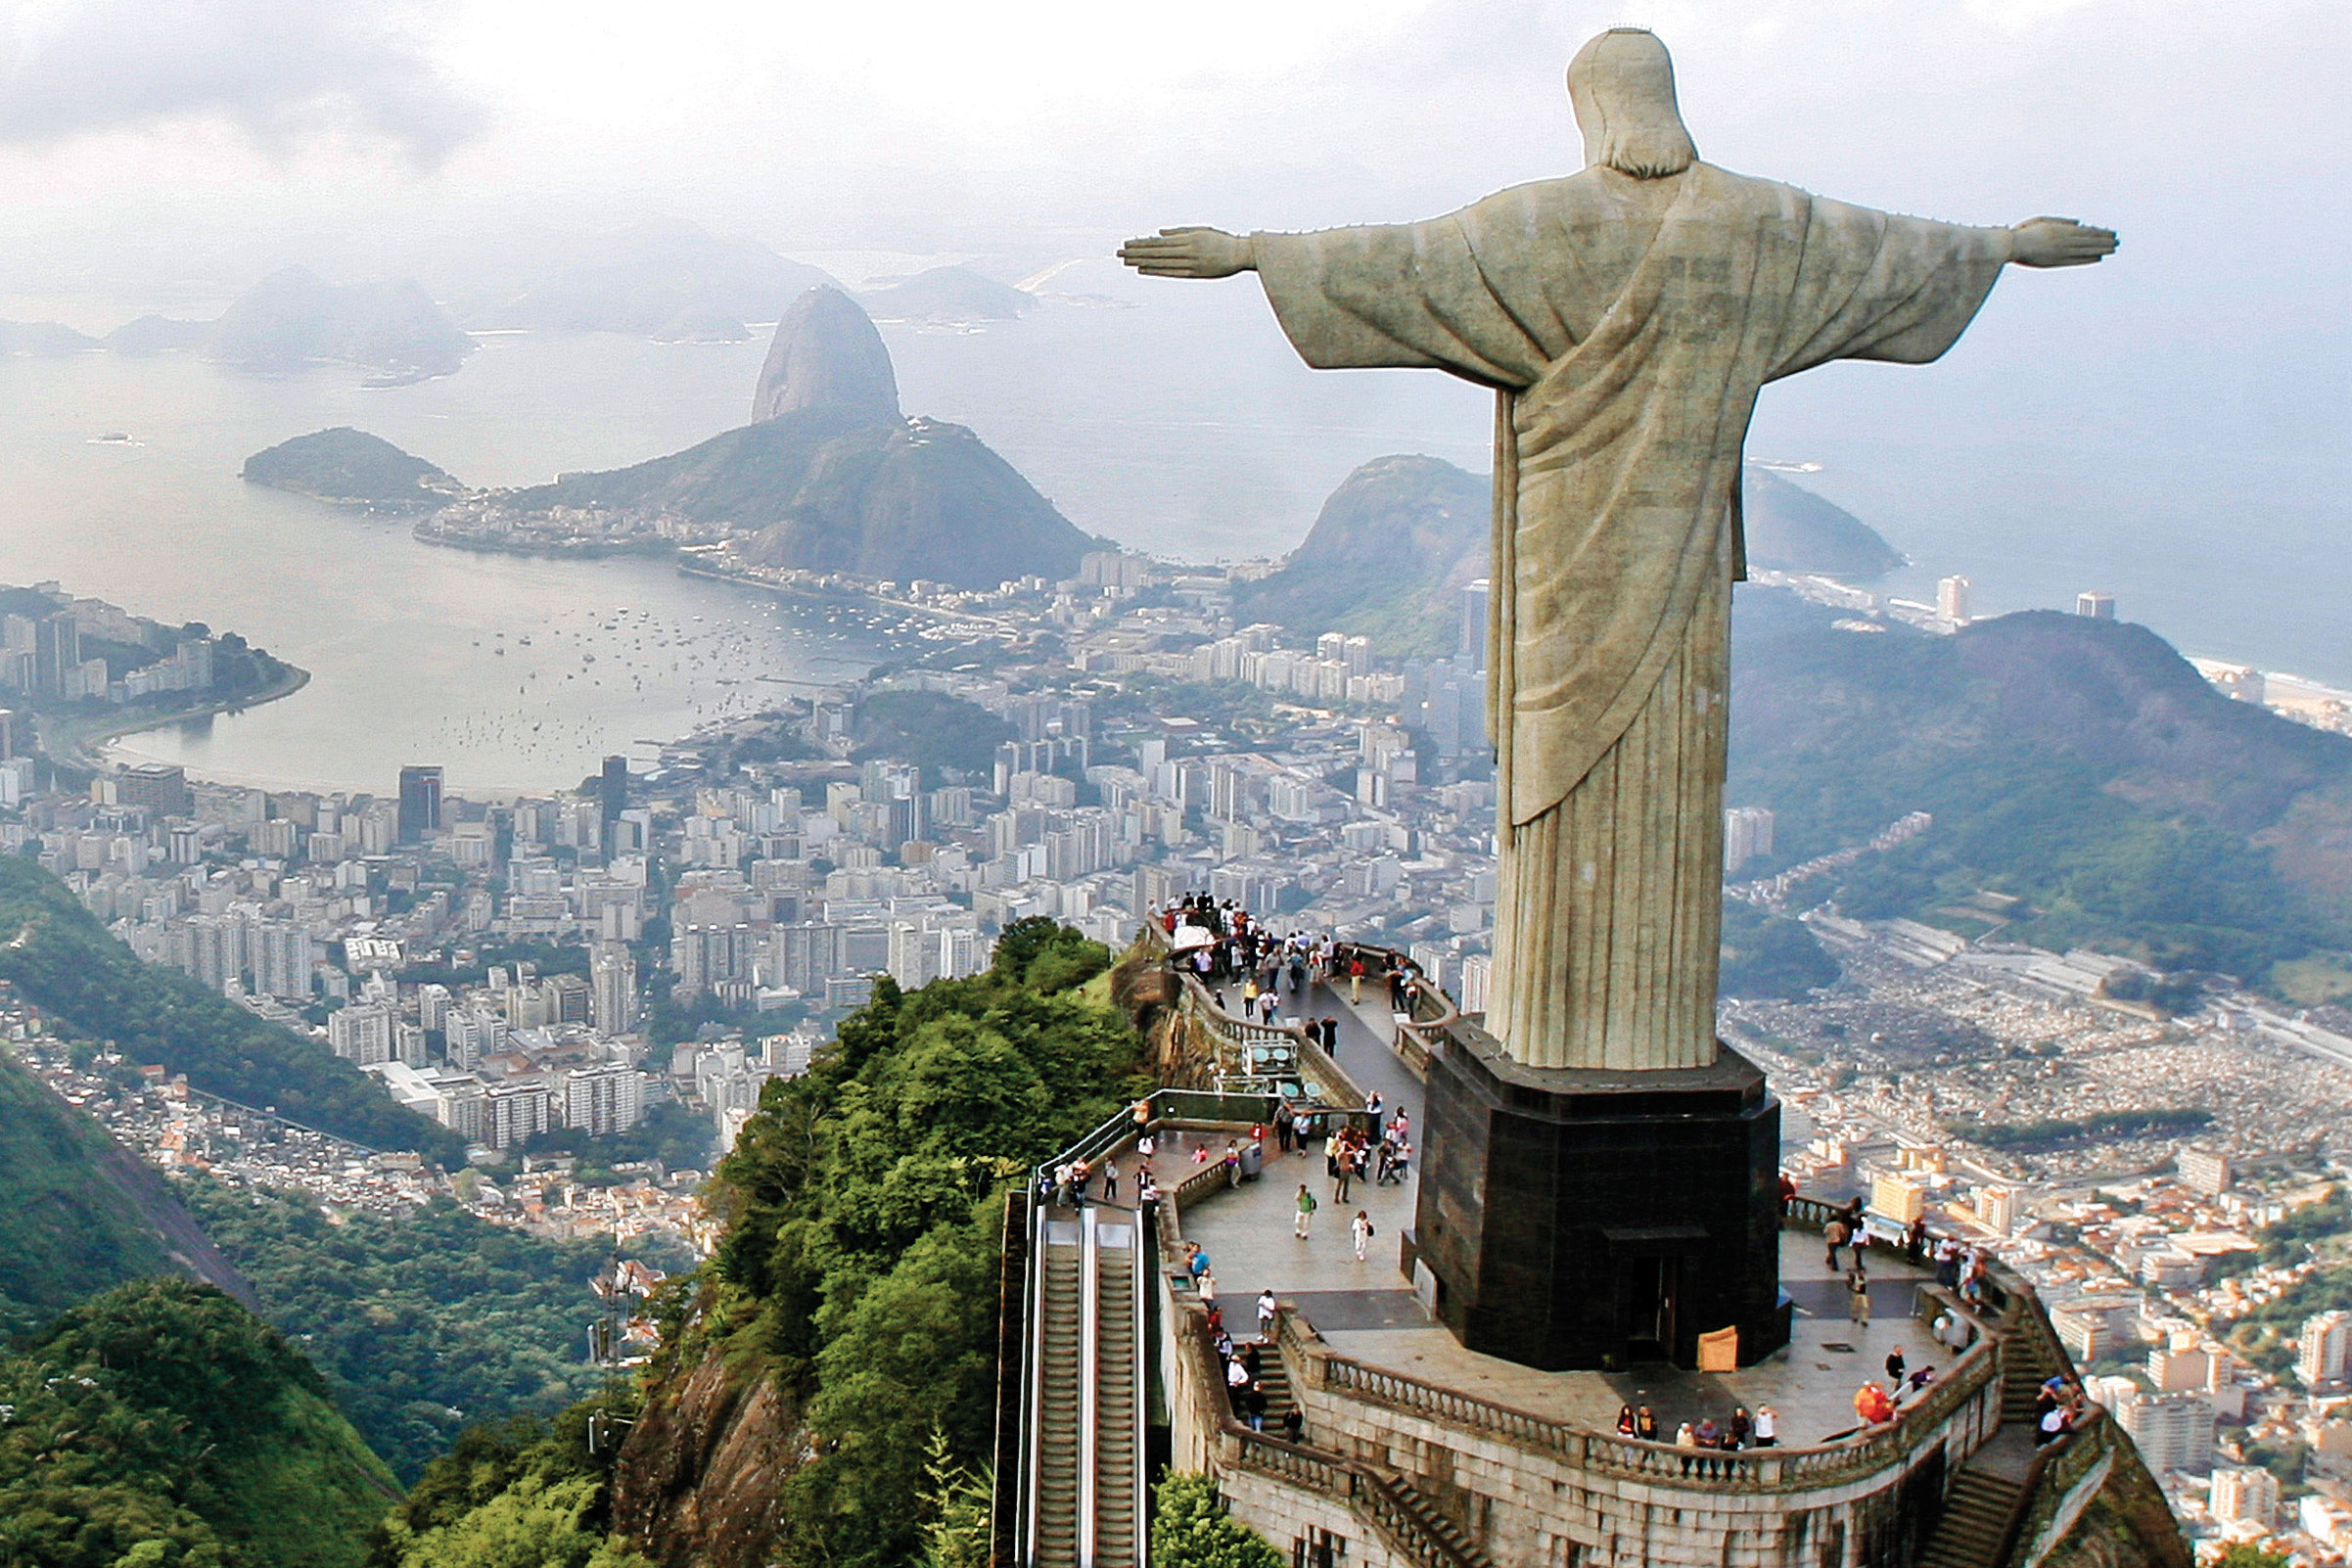 Rio d. Статуя Христа в Рио-де-Жанейро. Статуя Христа-Искупителя в Рио-де-Жанейро, Бразилия. Христос Искупитель Рио де Жанейро. Бразилия статуя Христа Спасителя.